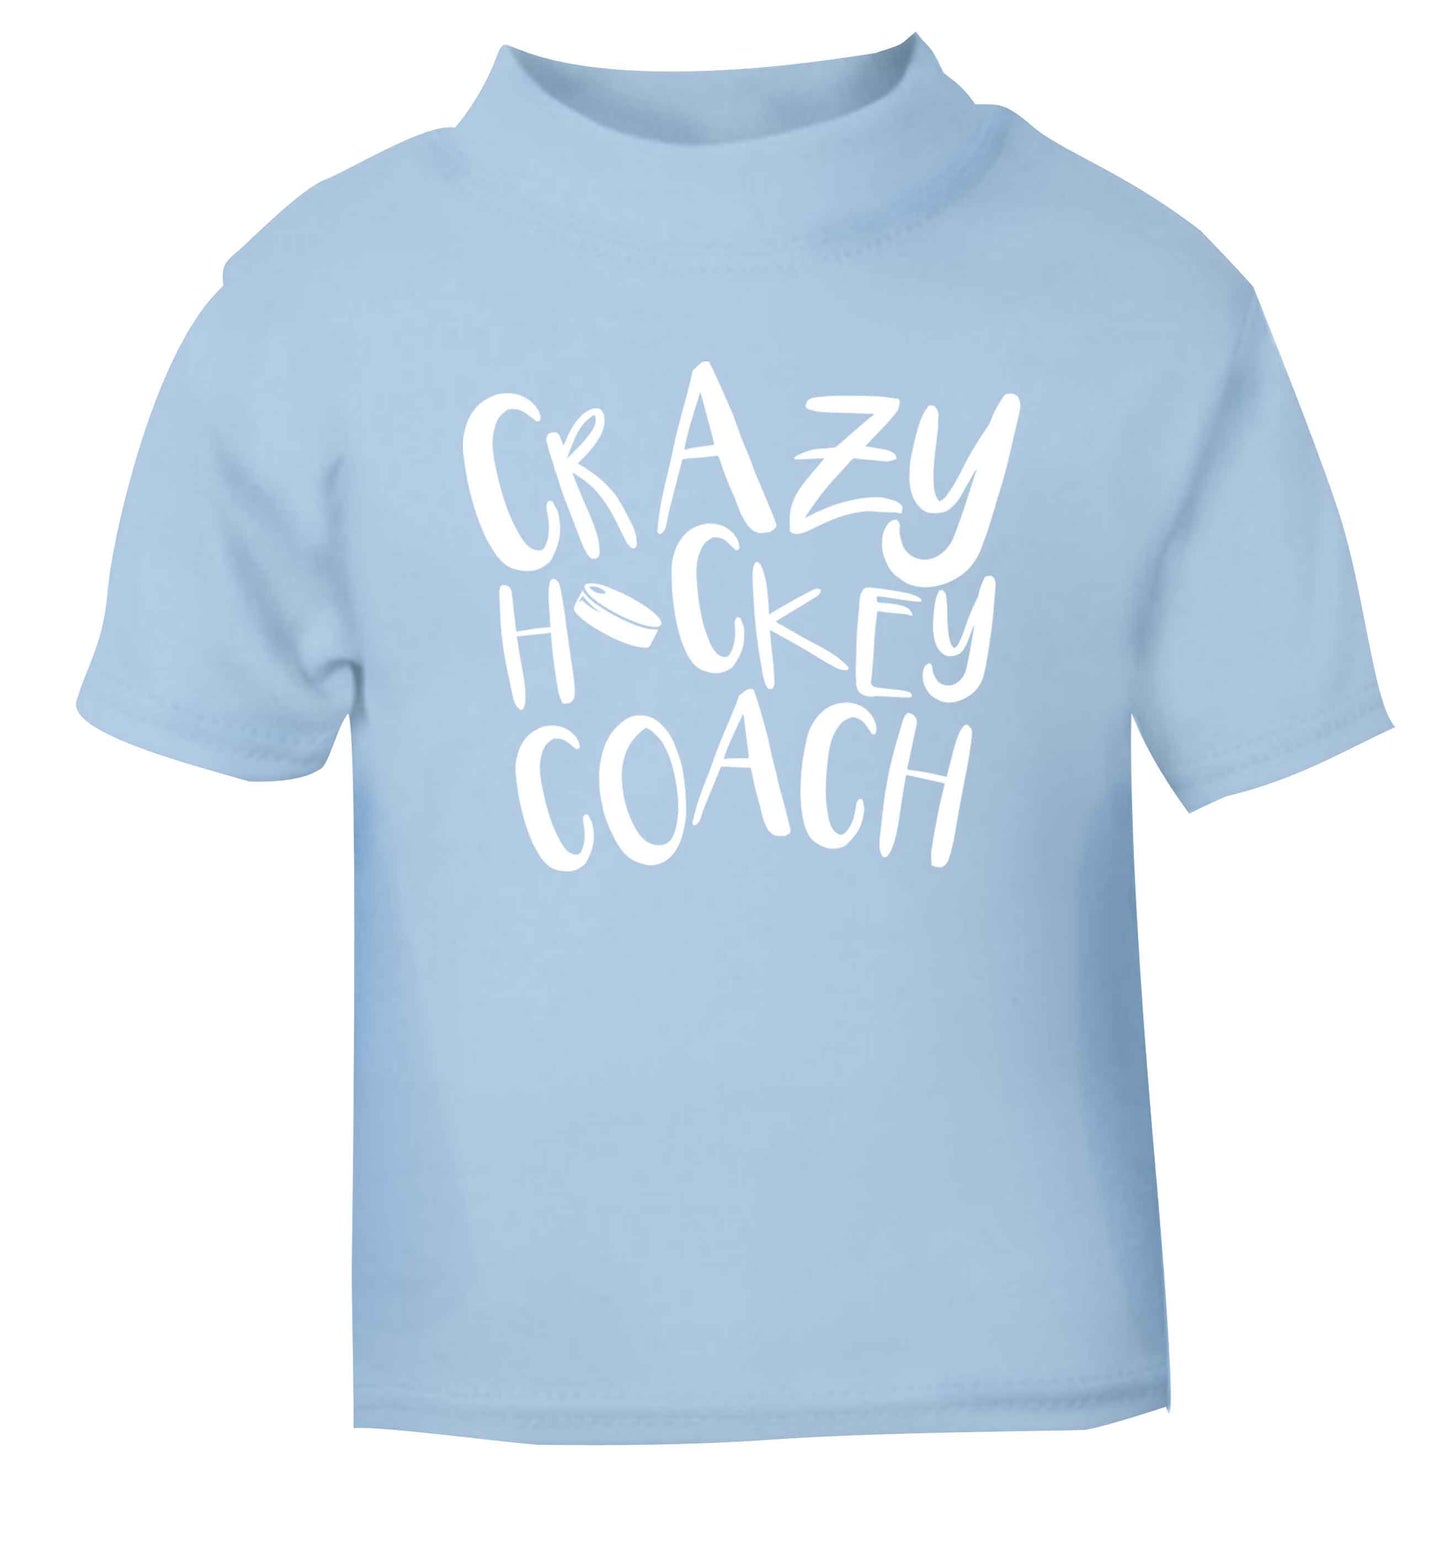 Crazy hockey coach light blue Baby Toddler Tshirt 2 Years